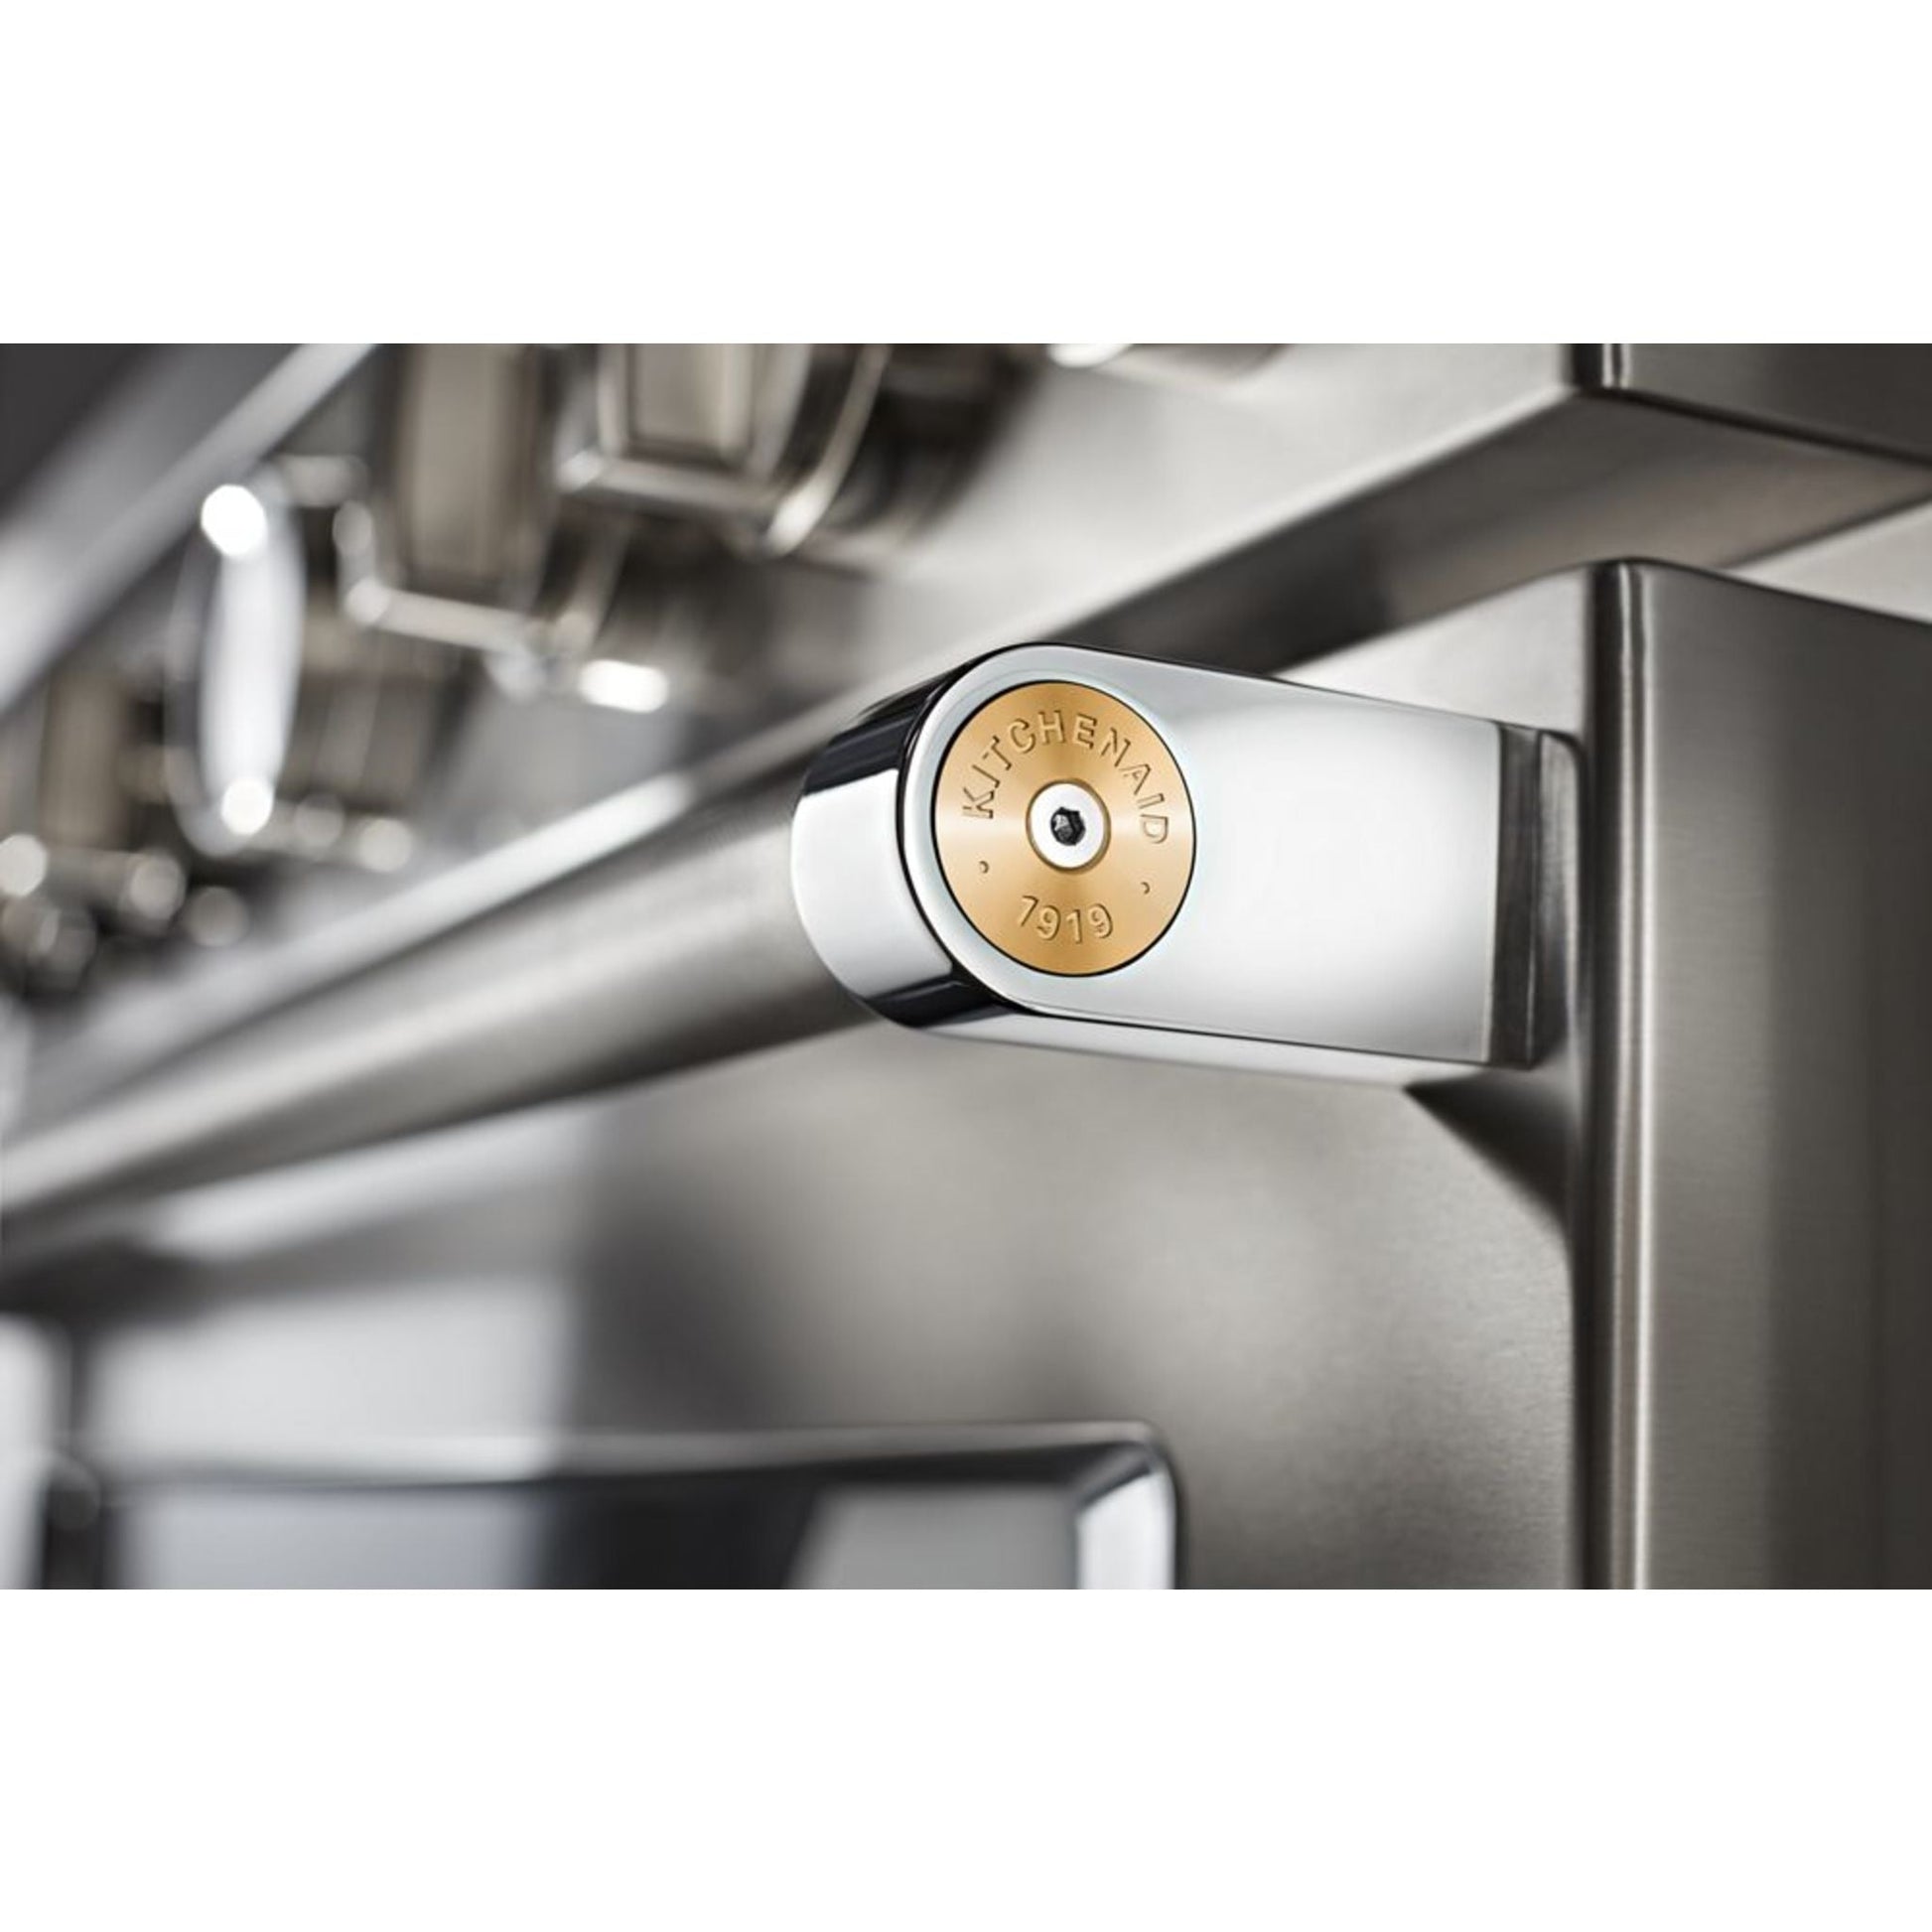 KitchenAid Dual Fuel Range (KFDC558JSS) - Stainless Steel